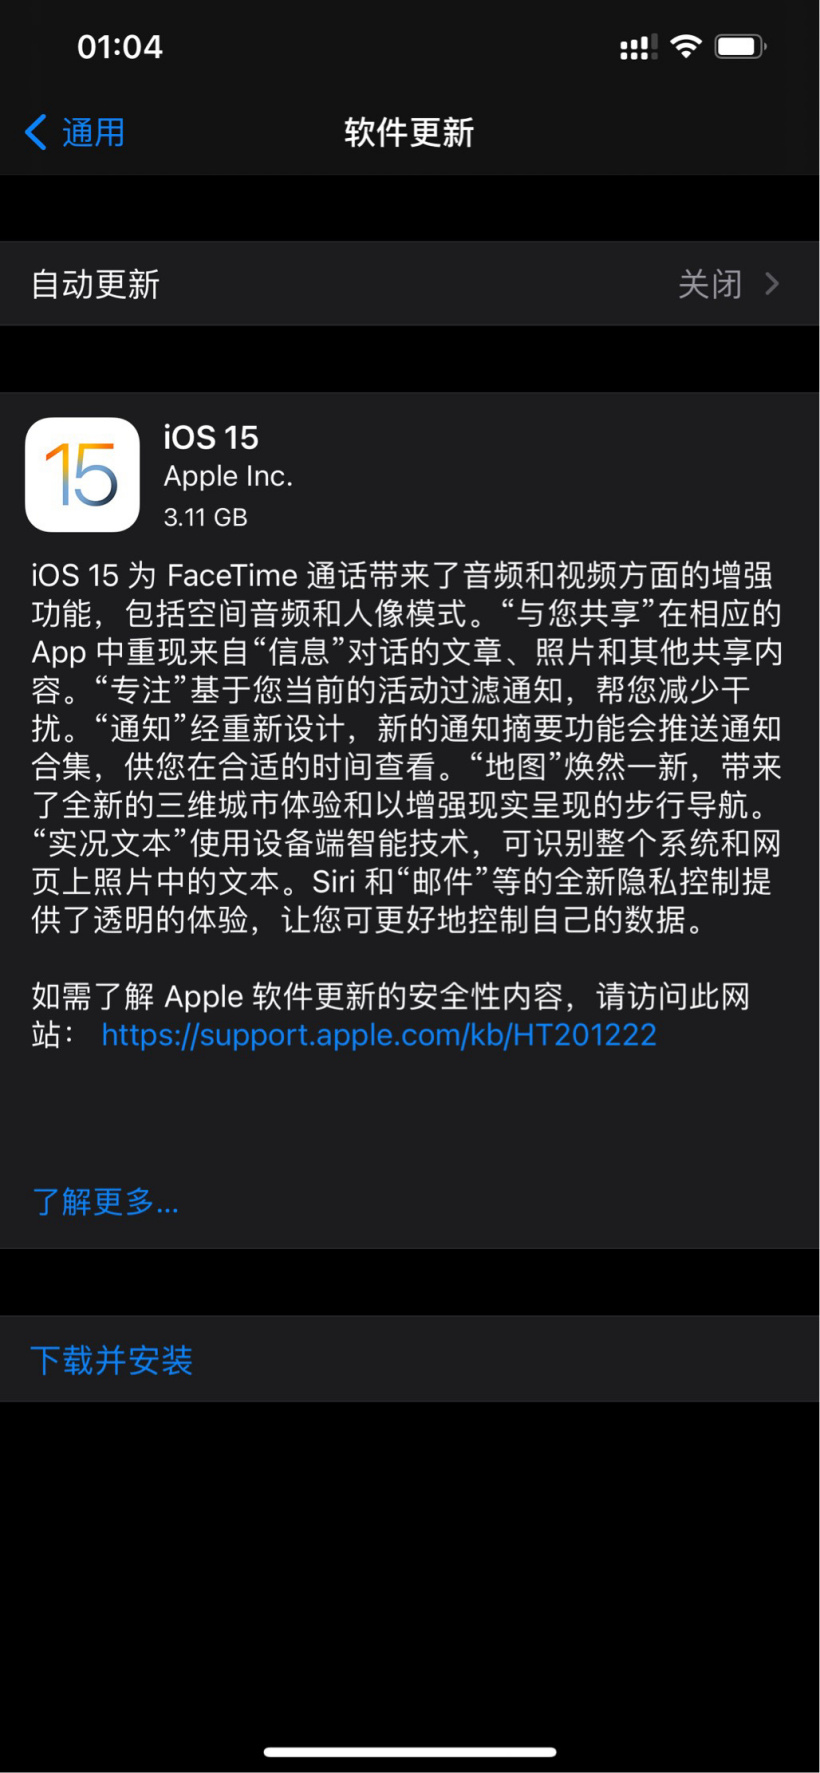 iOS15 19A346正式版描述文件官方更新图1: